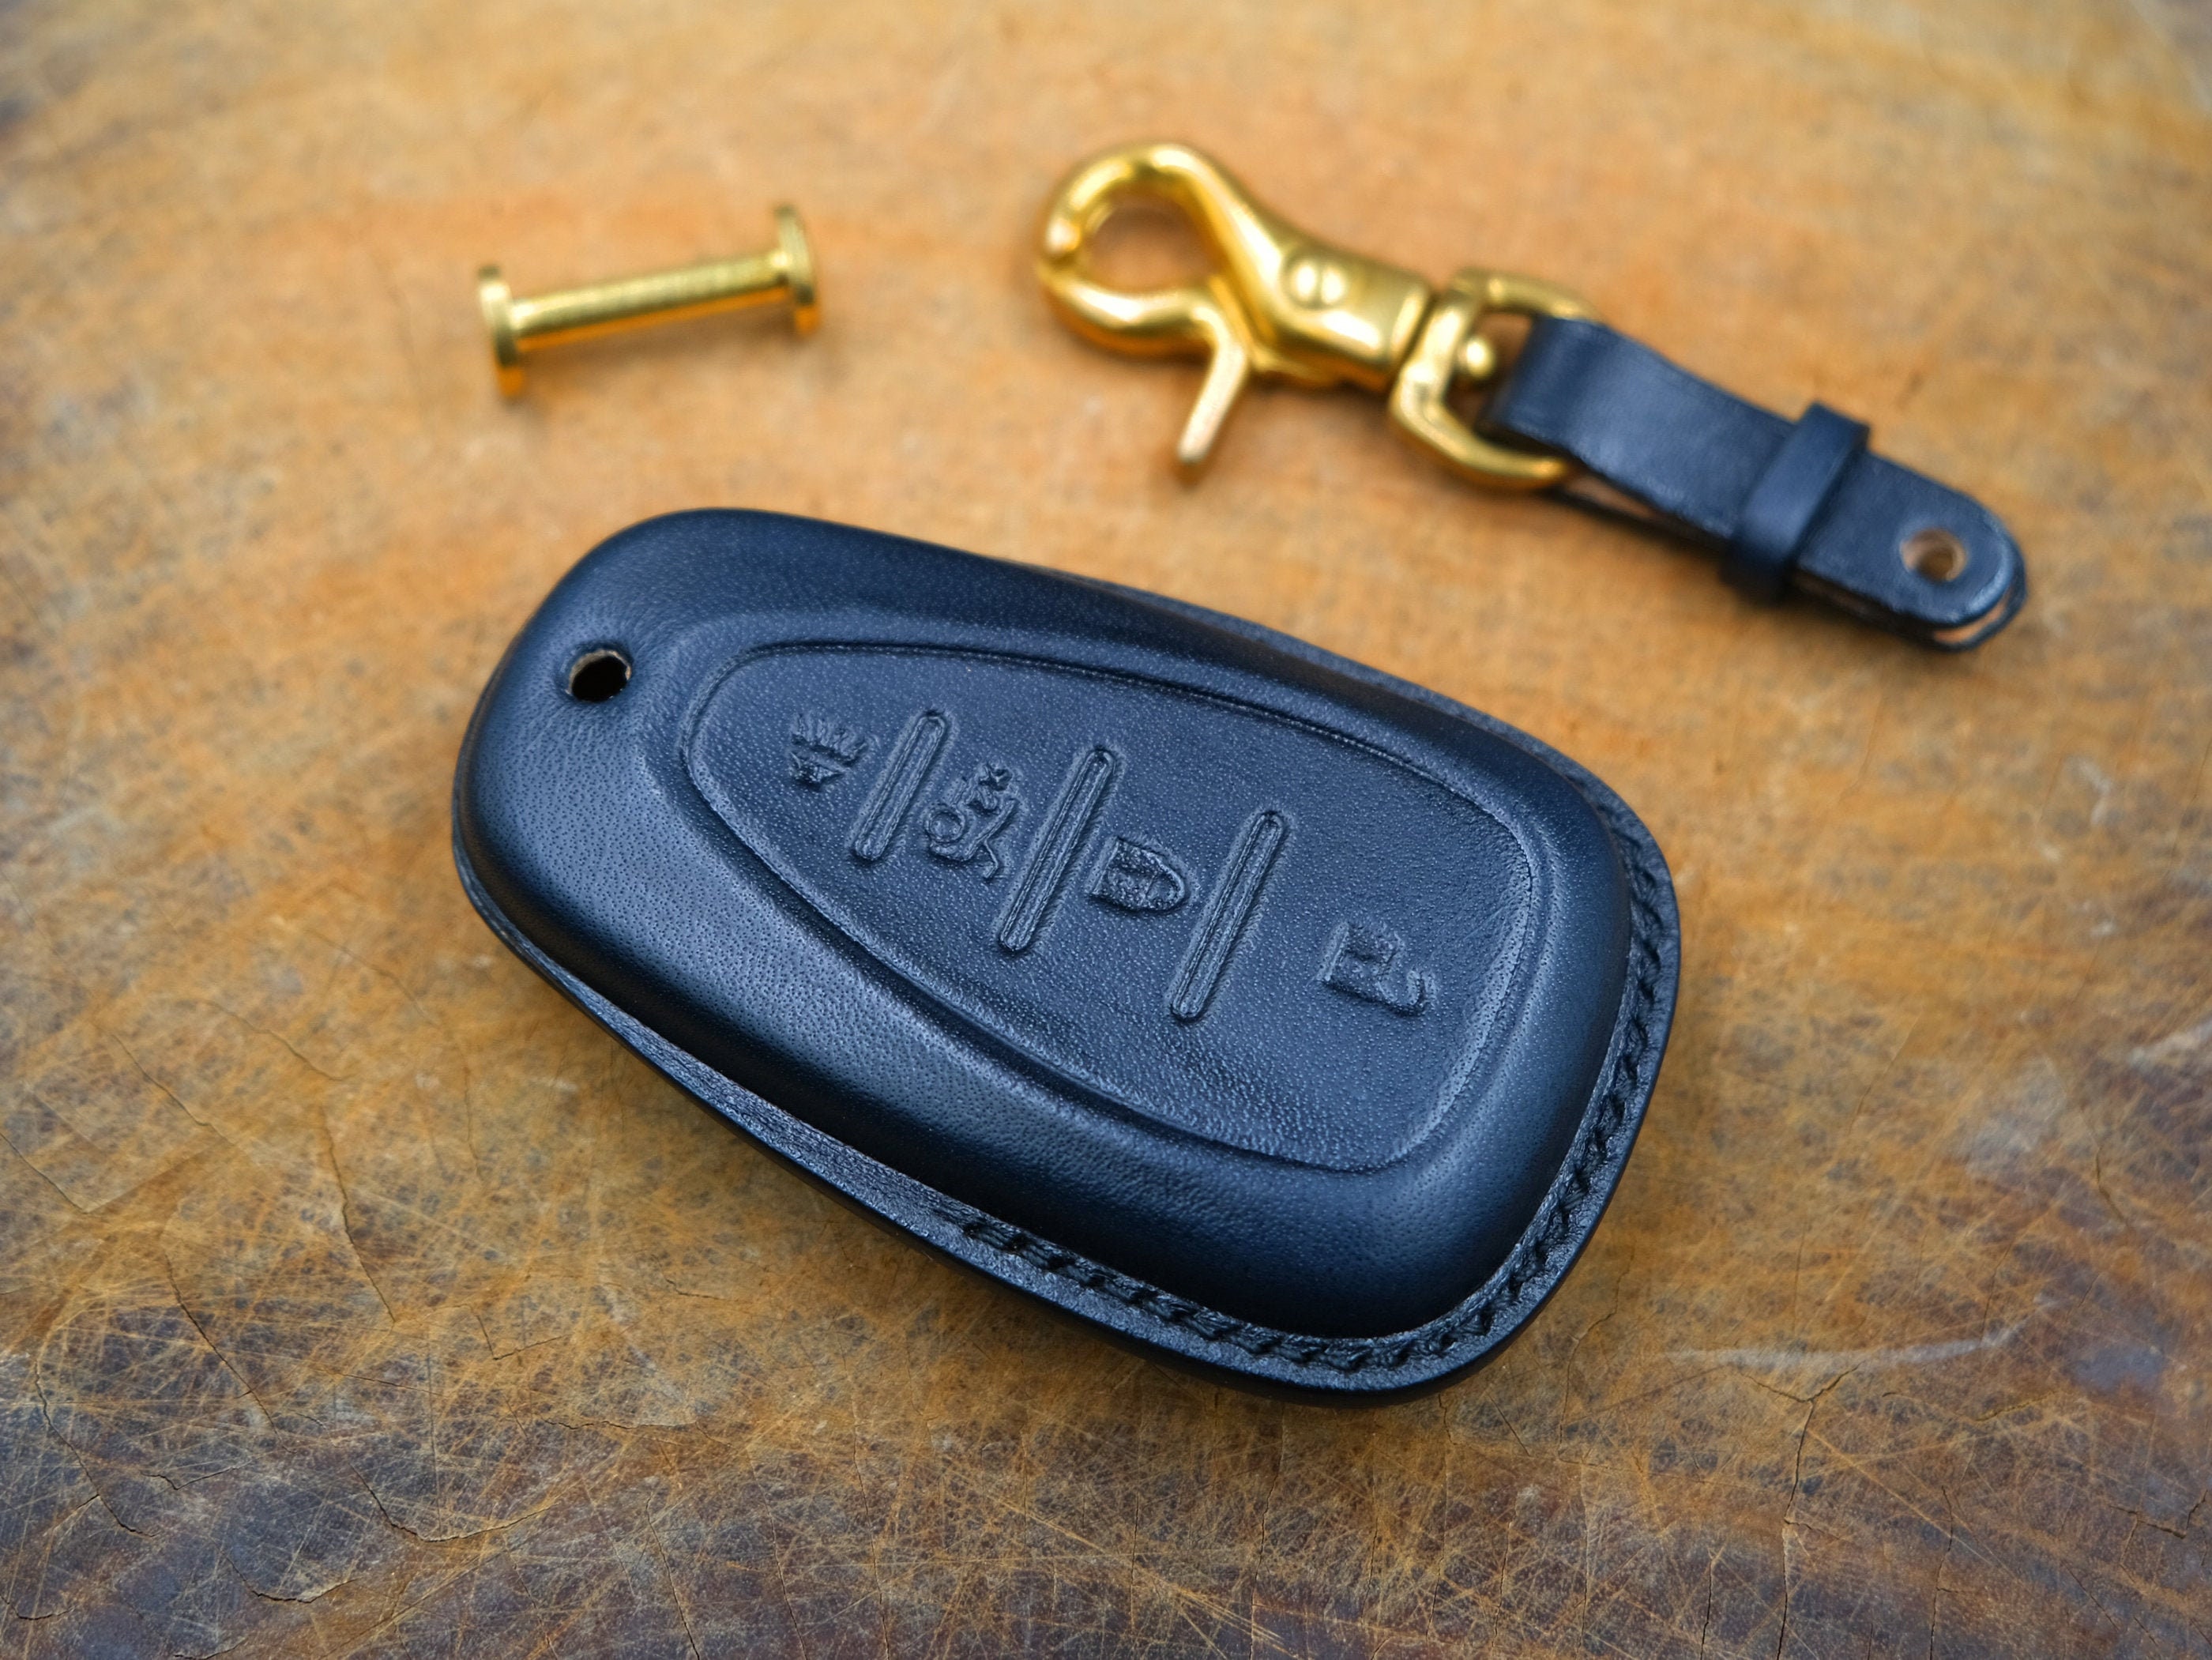  MAKEER Leather Key Case fob Holder,Key Cover Replacement for  Chevrolet2017 2018 2019 2020 2021 Chevy Malibu Camaro Trax Traverse Sonic  Cruze Volt Equinox Protective Remote Key,JDB-JDPS-Model B-Black : Automotive